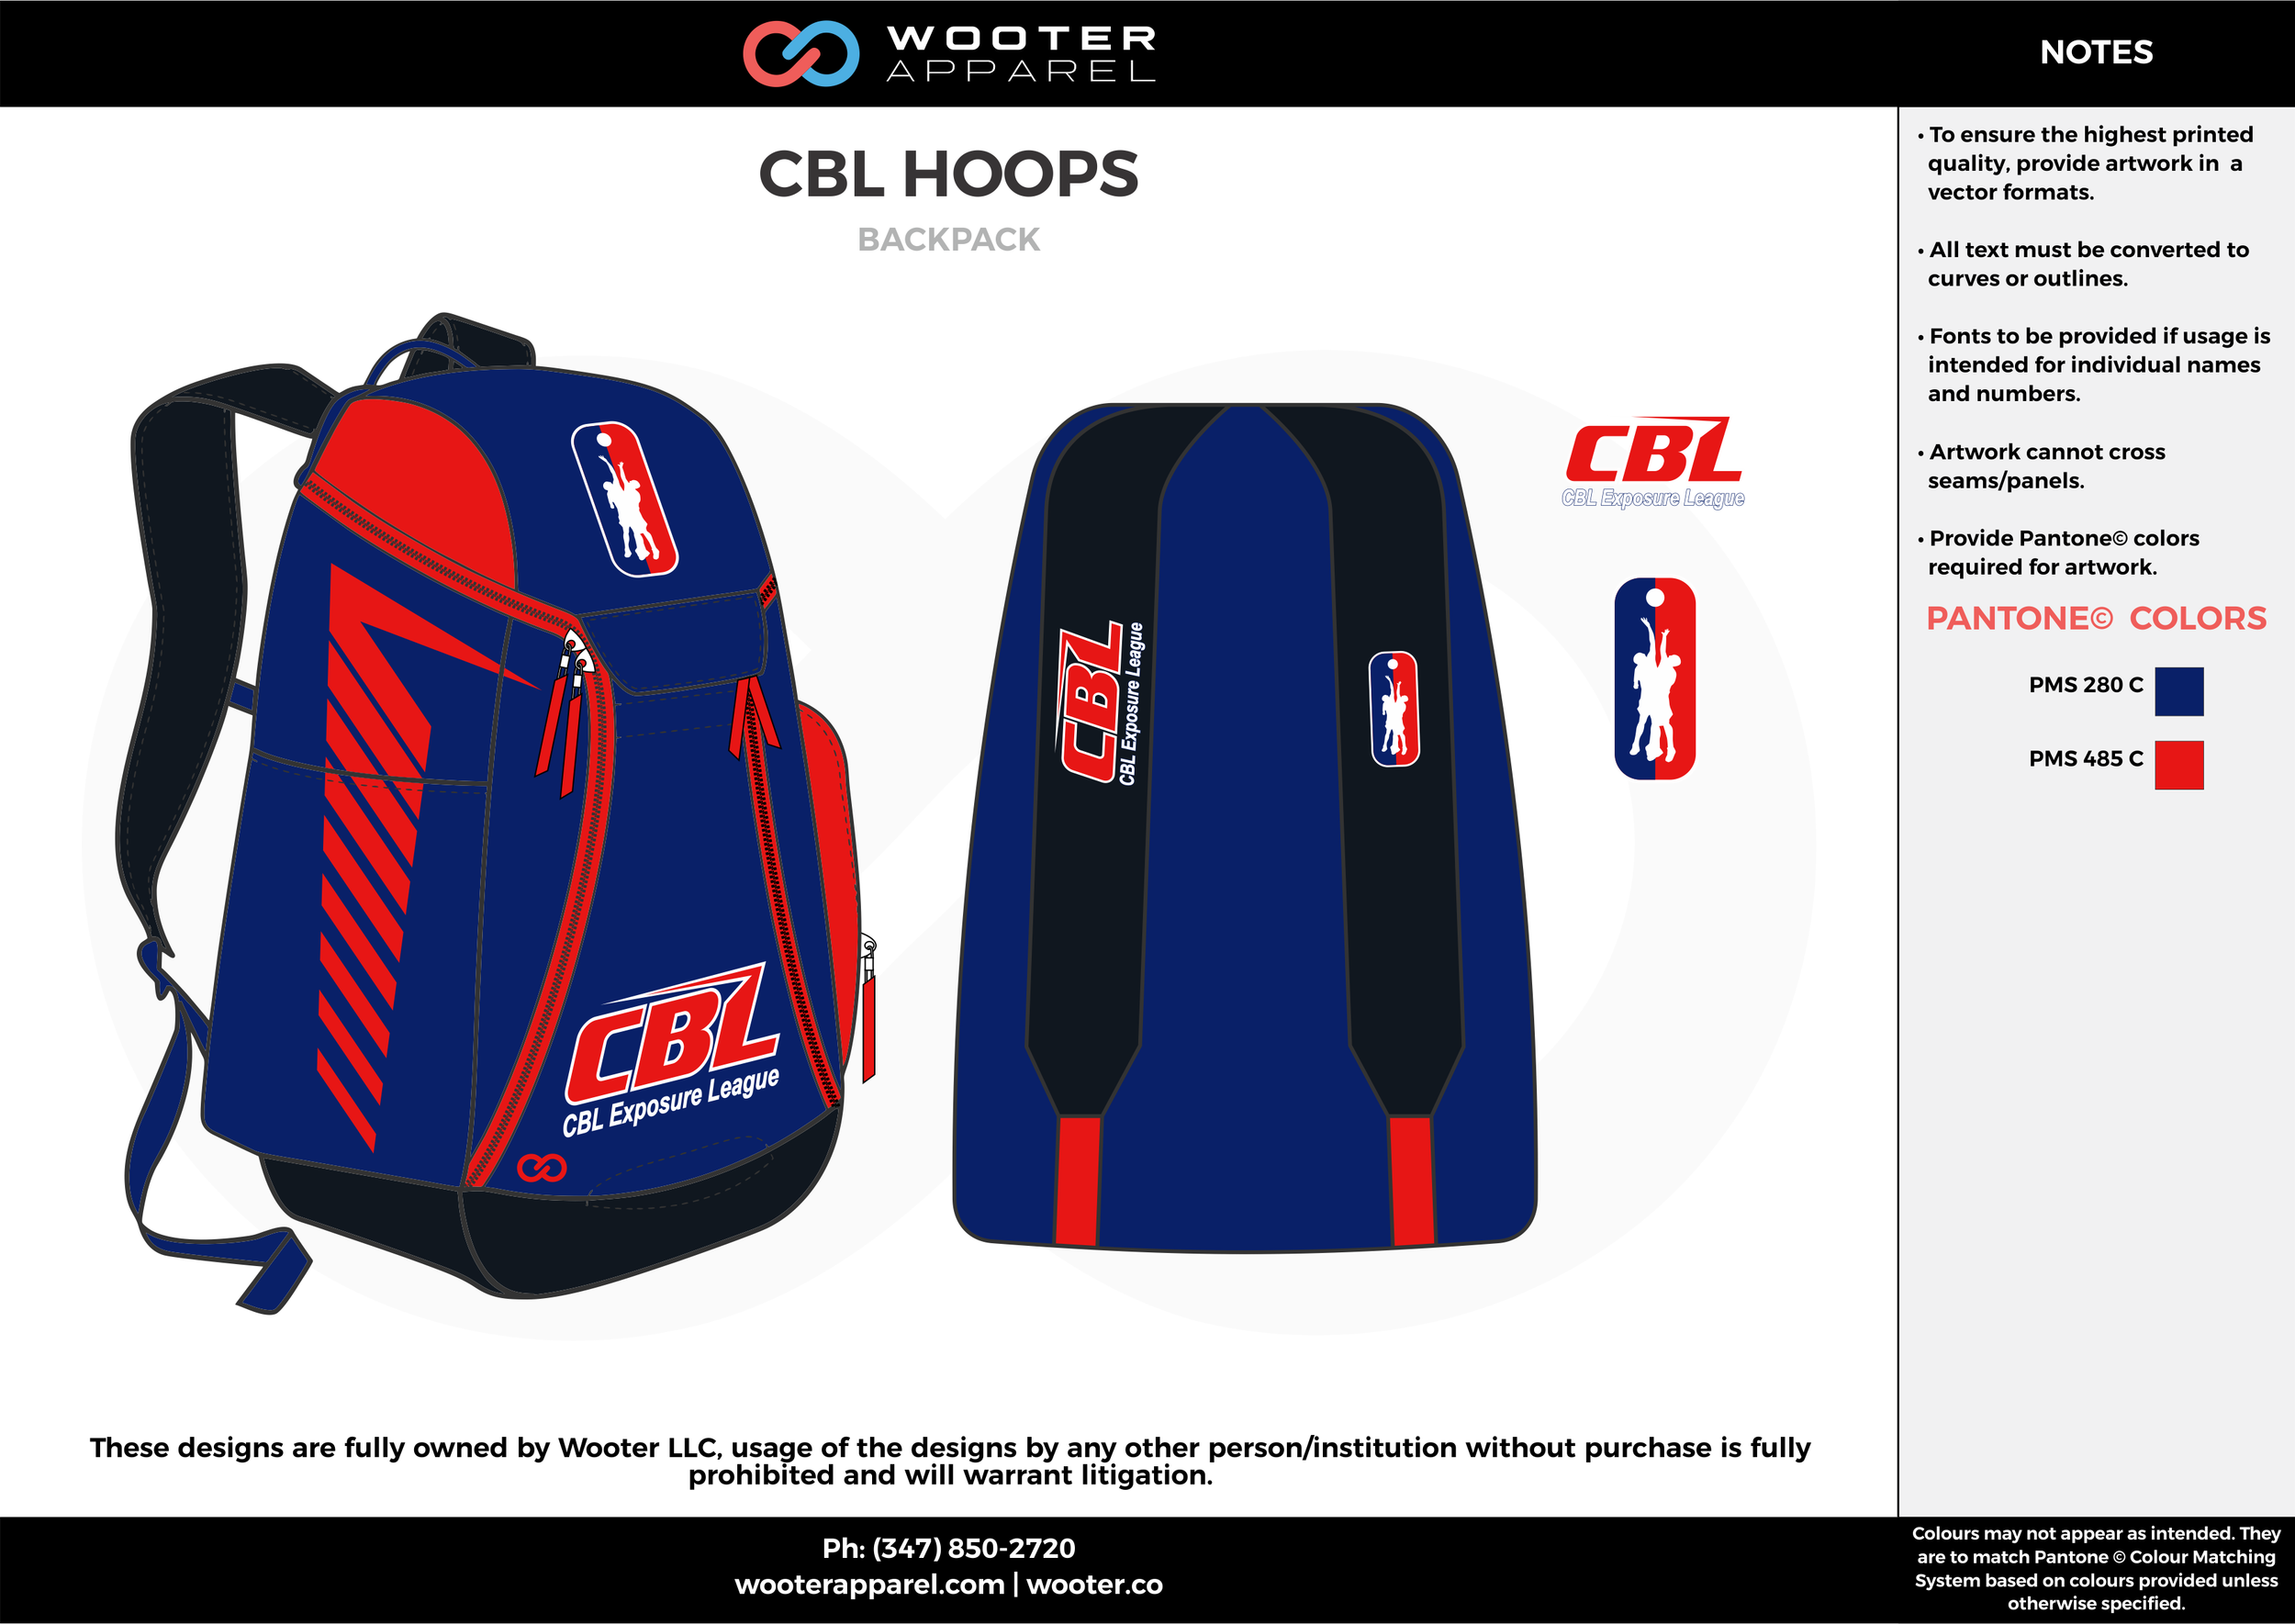 nike elite basketball bag custom